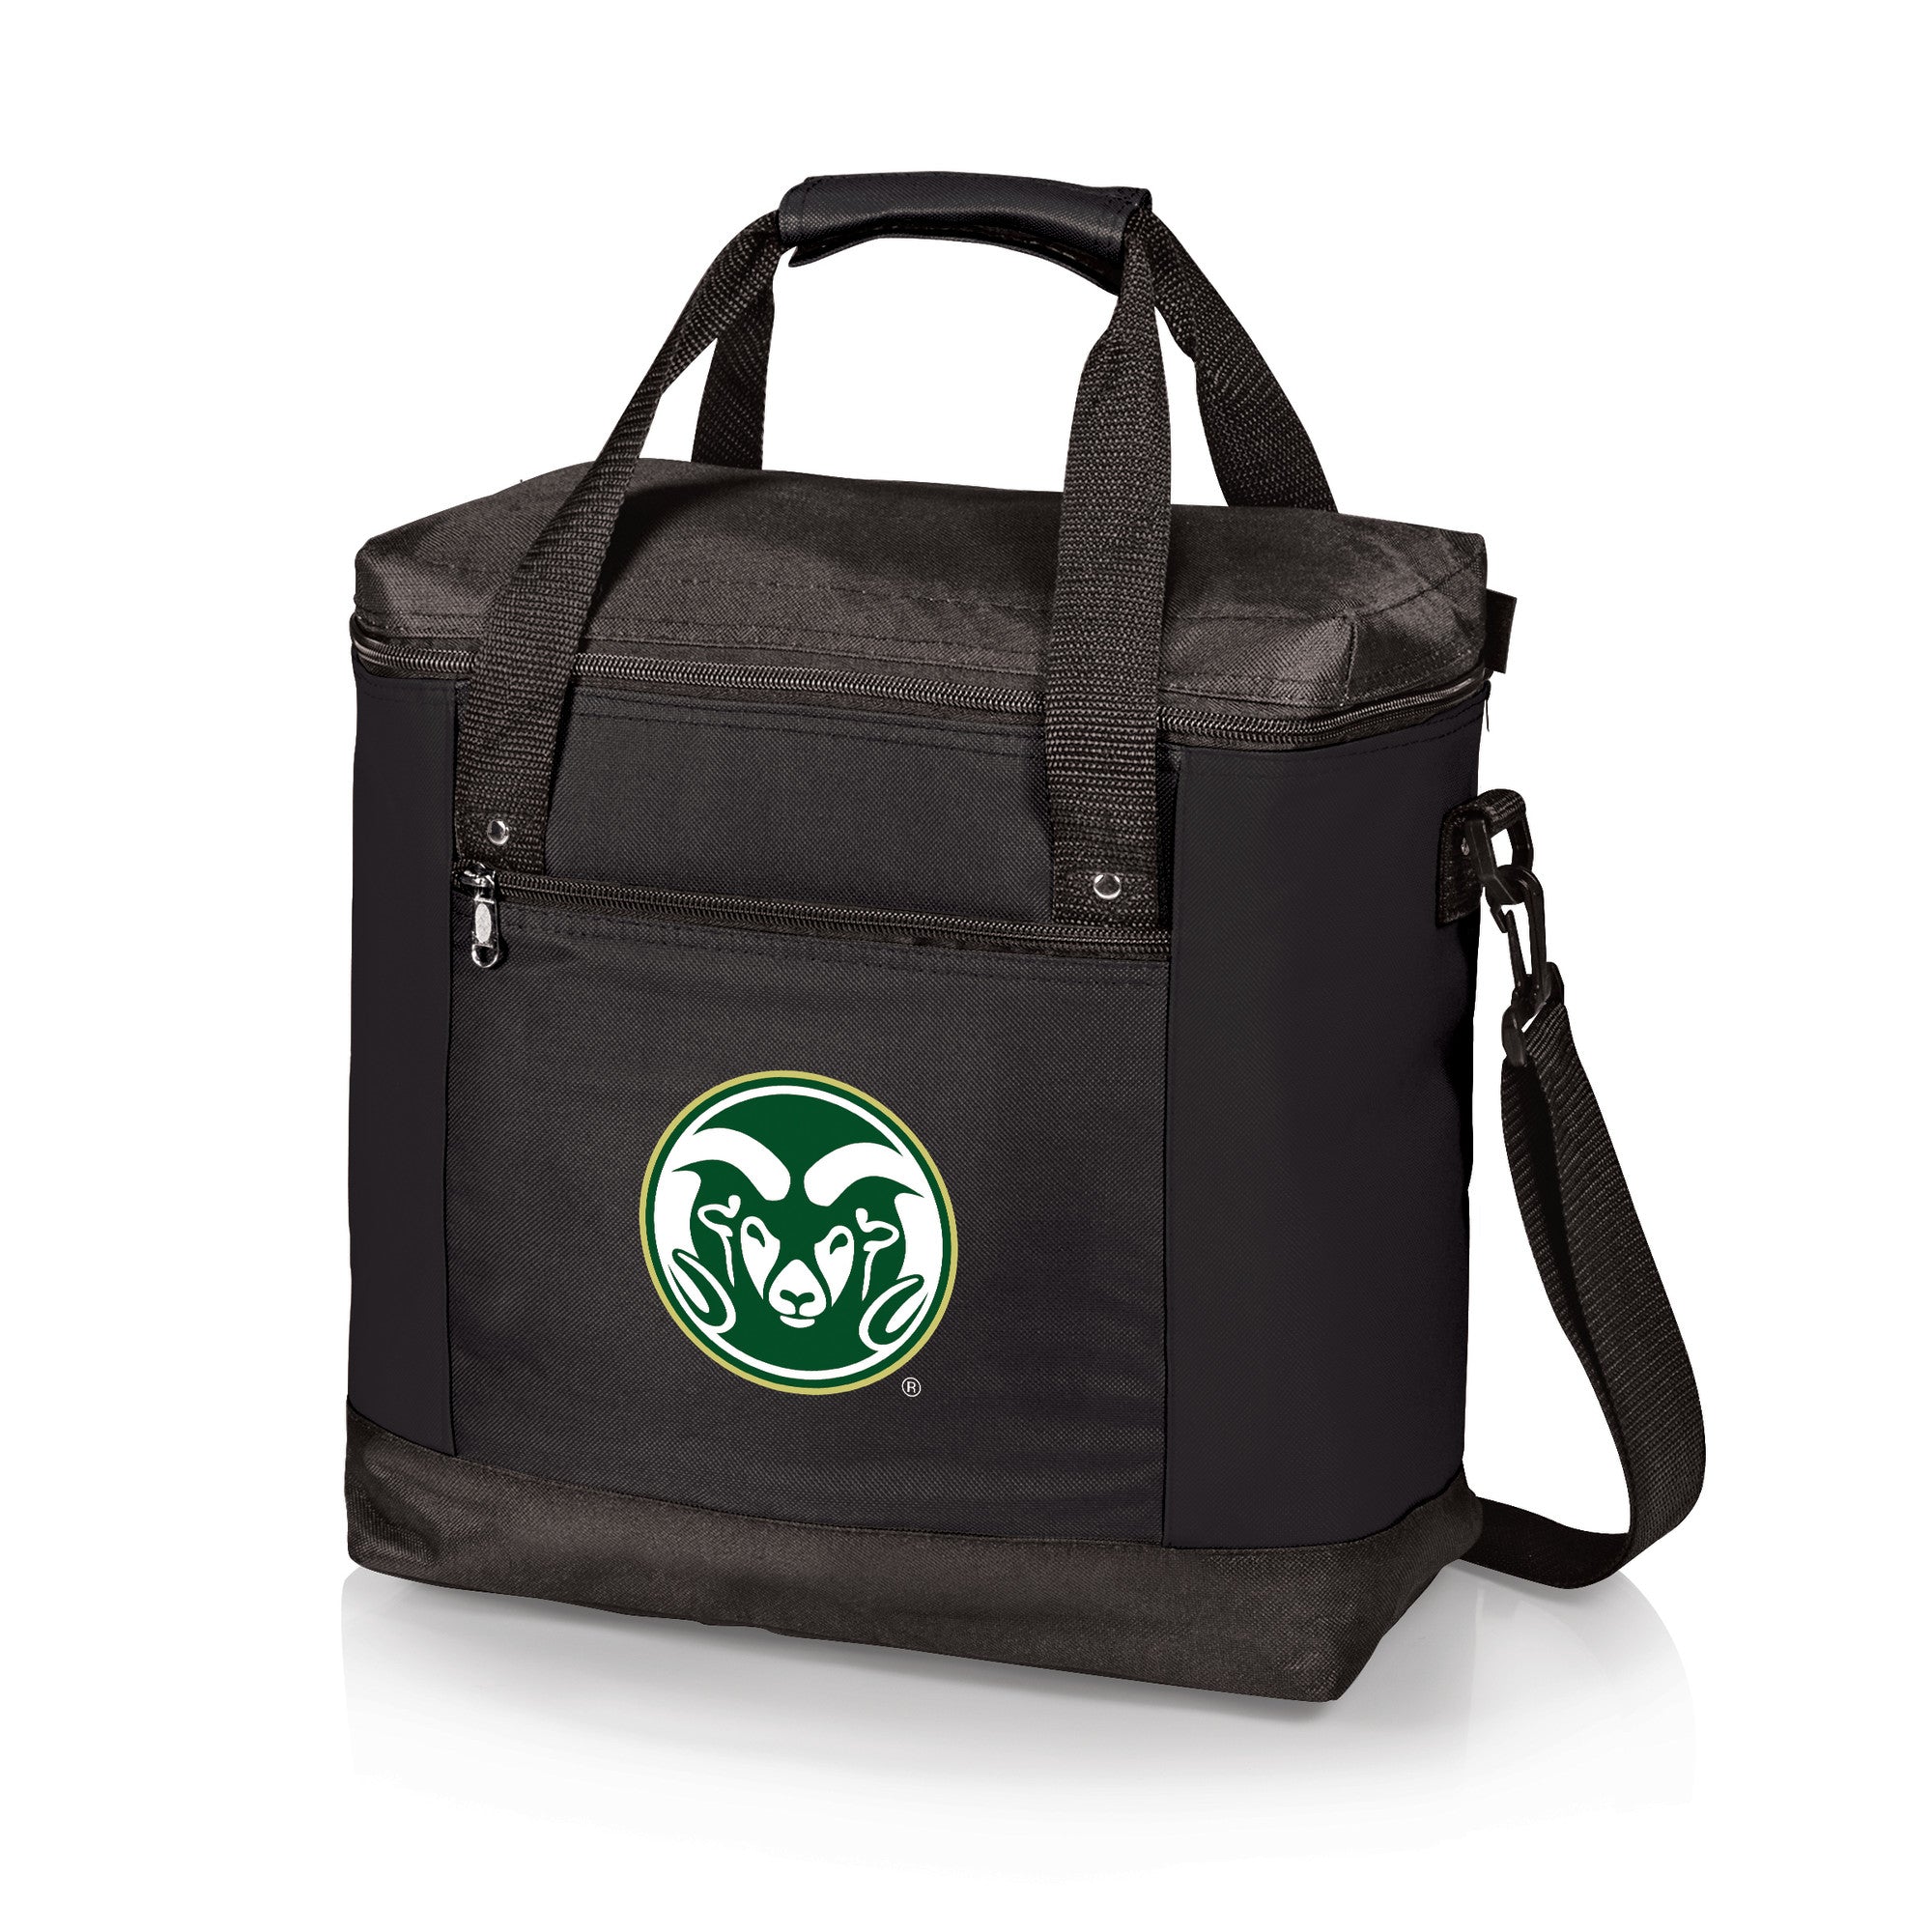 Colorado State Rams - Montero Cooler Tote Bag